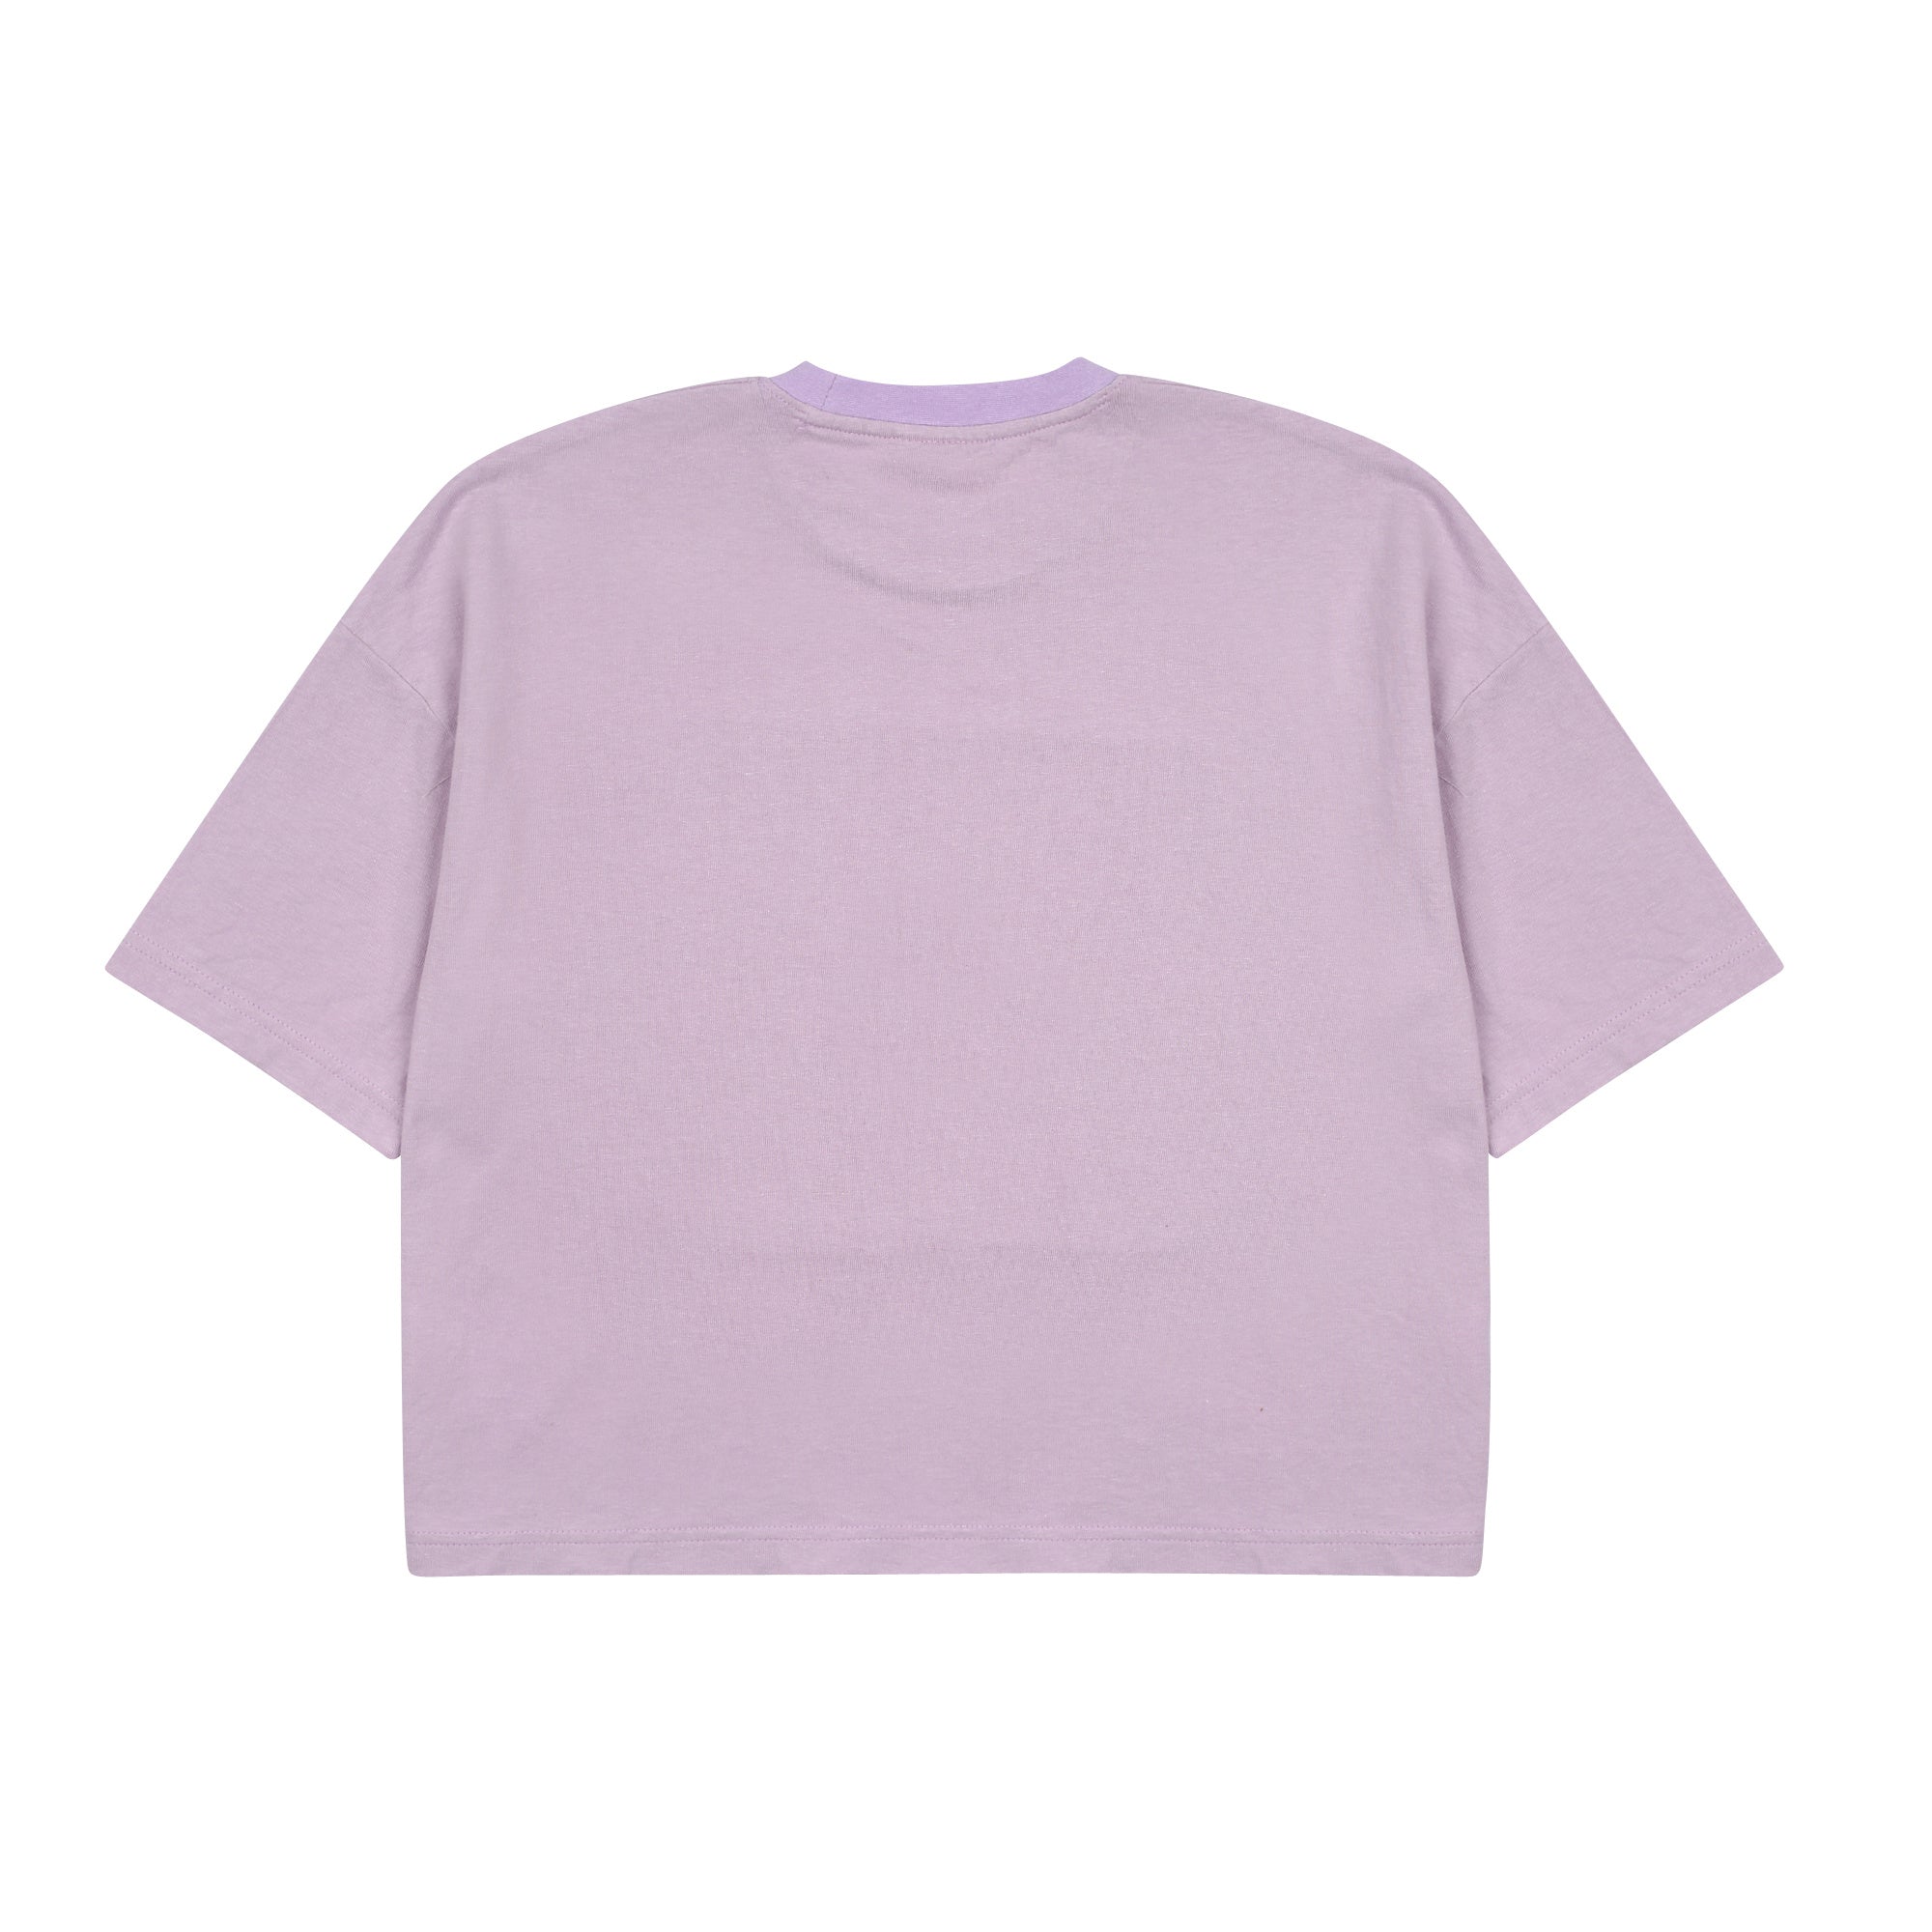 Boys & Girls Light Purple Printed Cotton T-Shirt